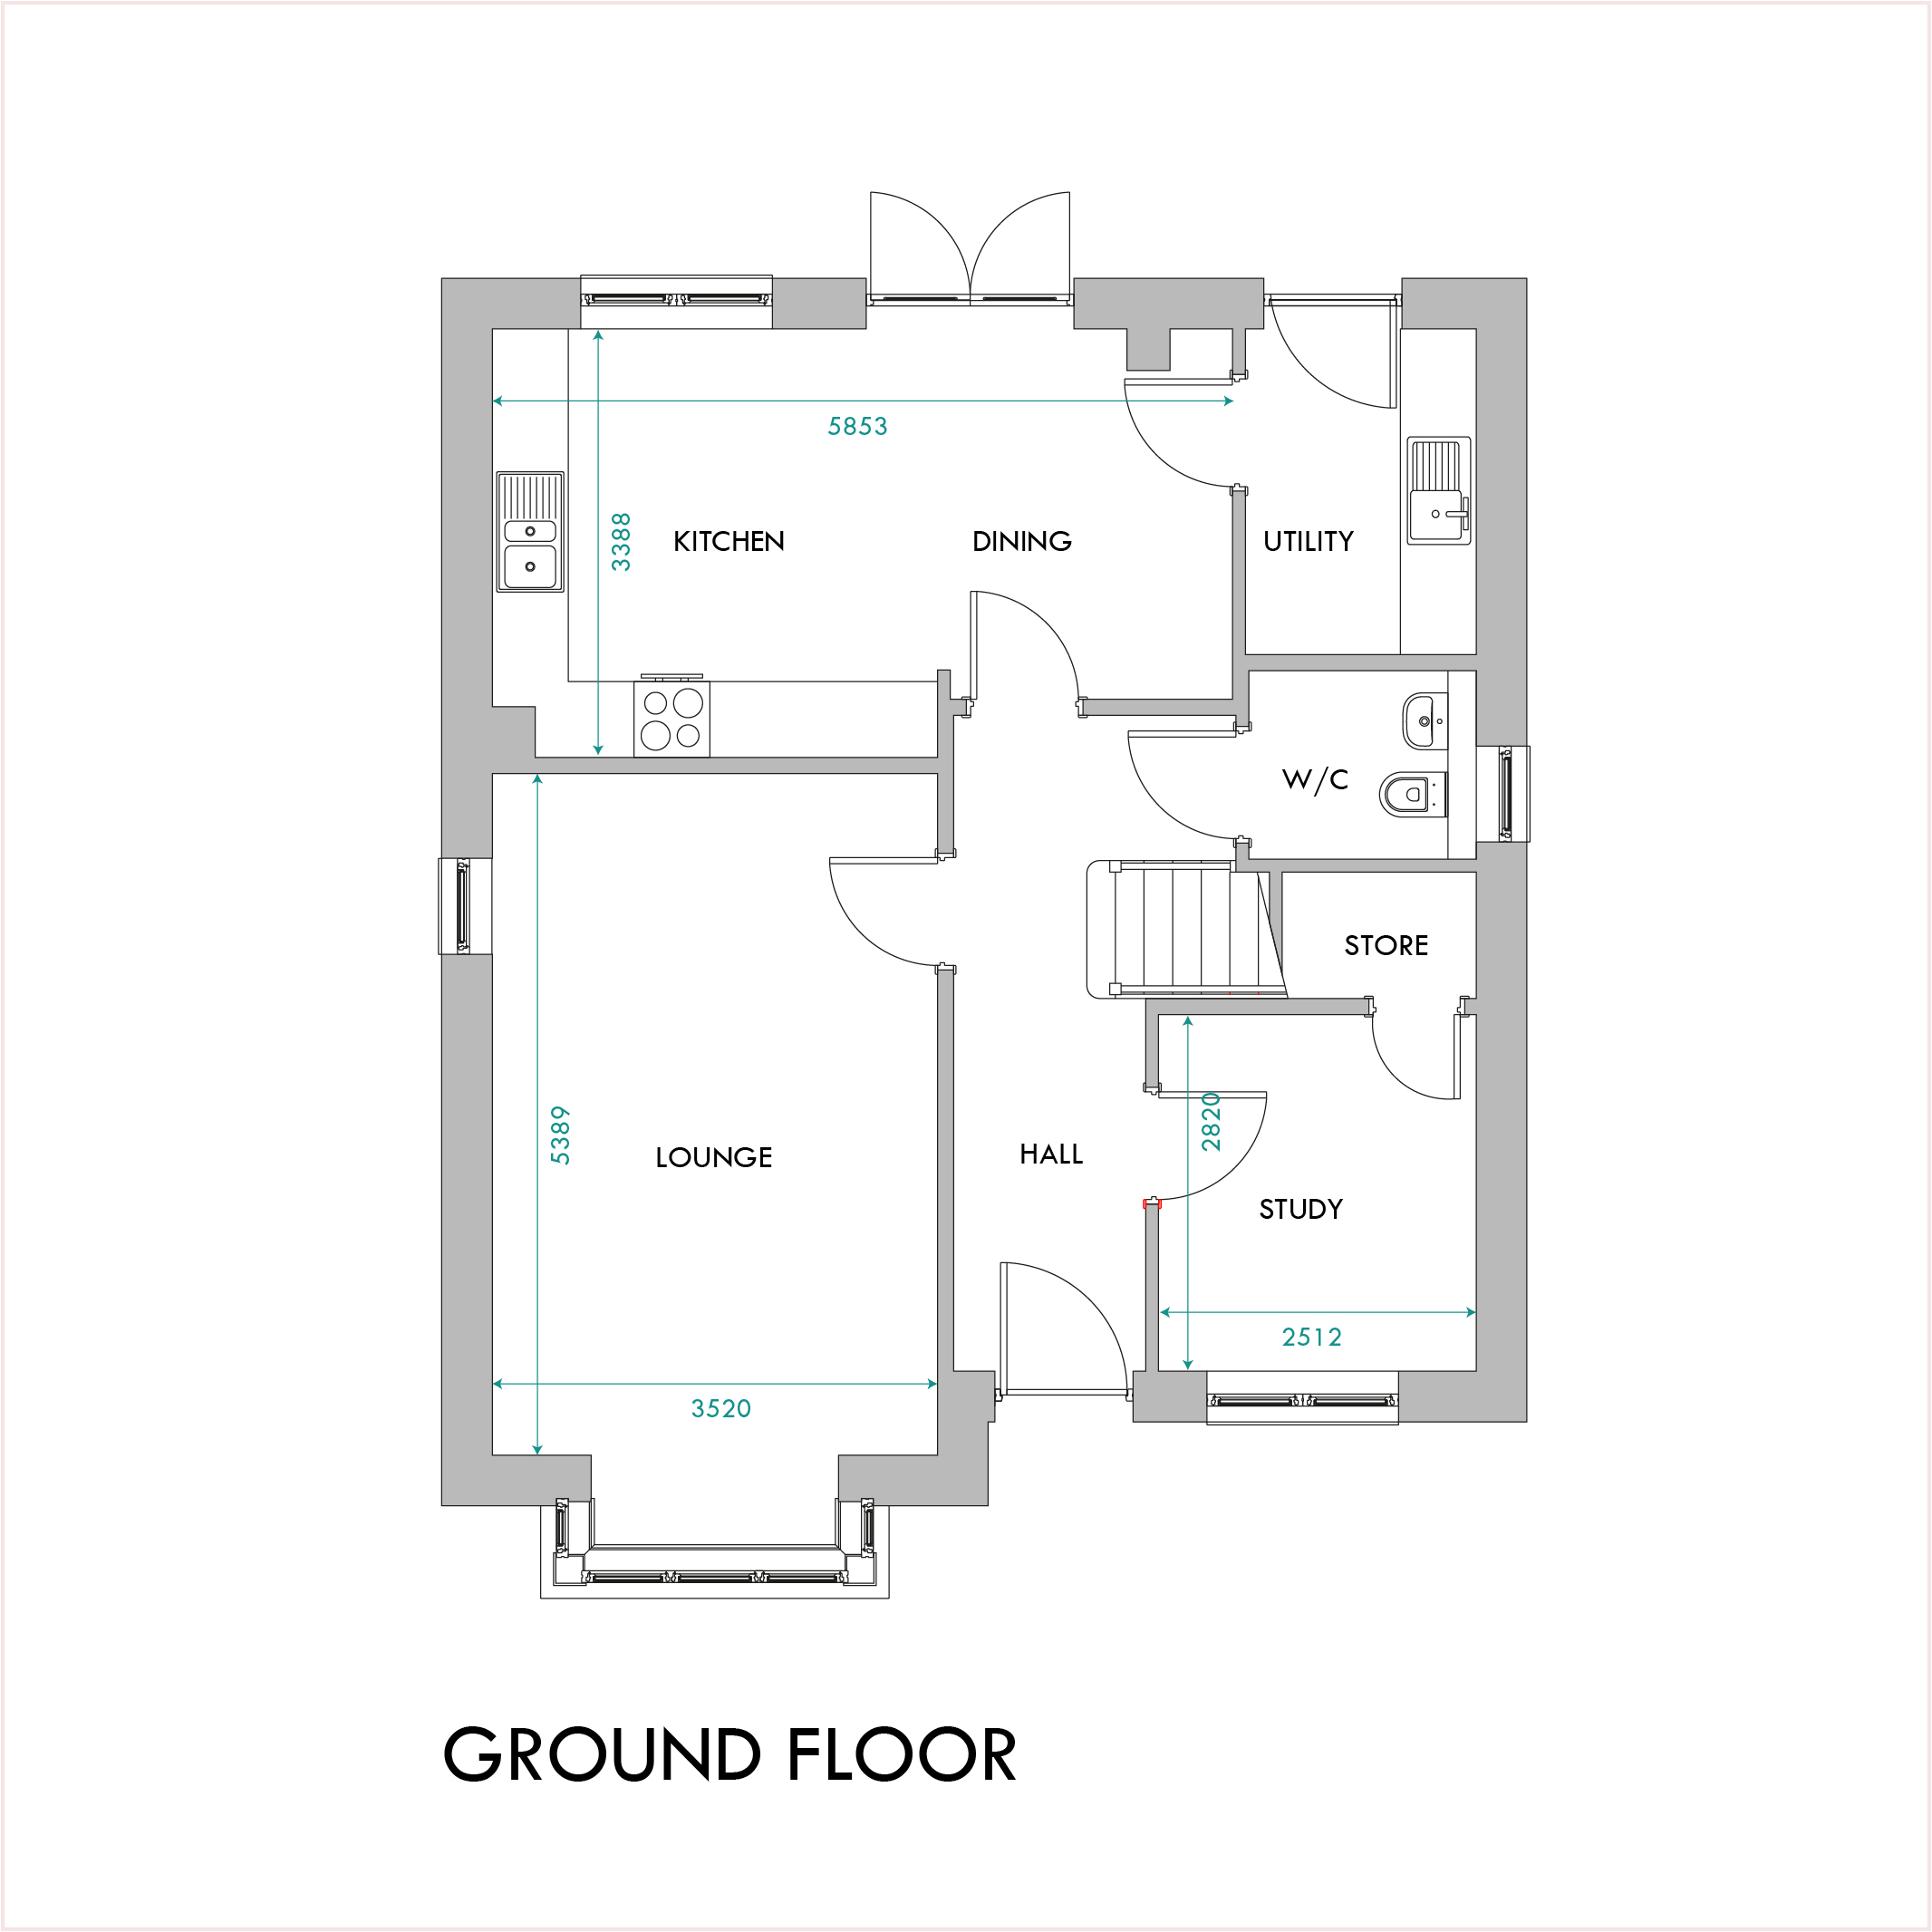 Redwood ground floor plan